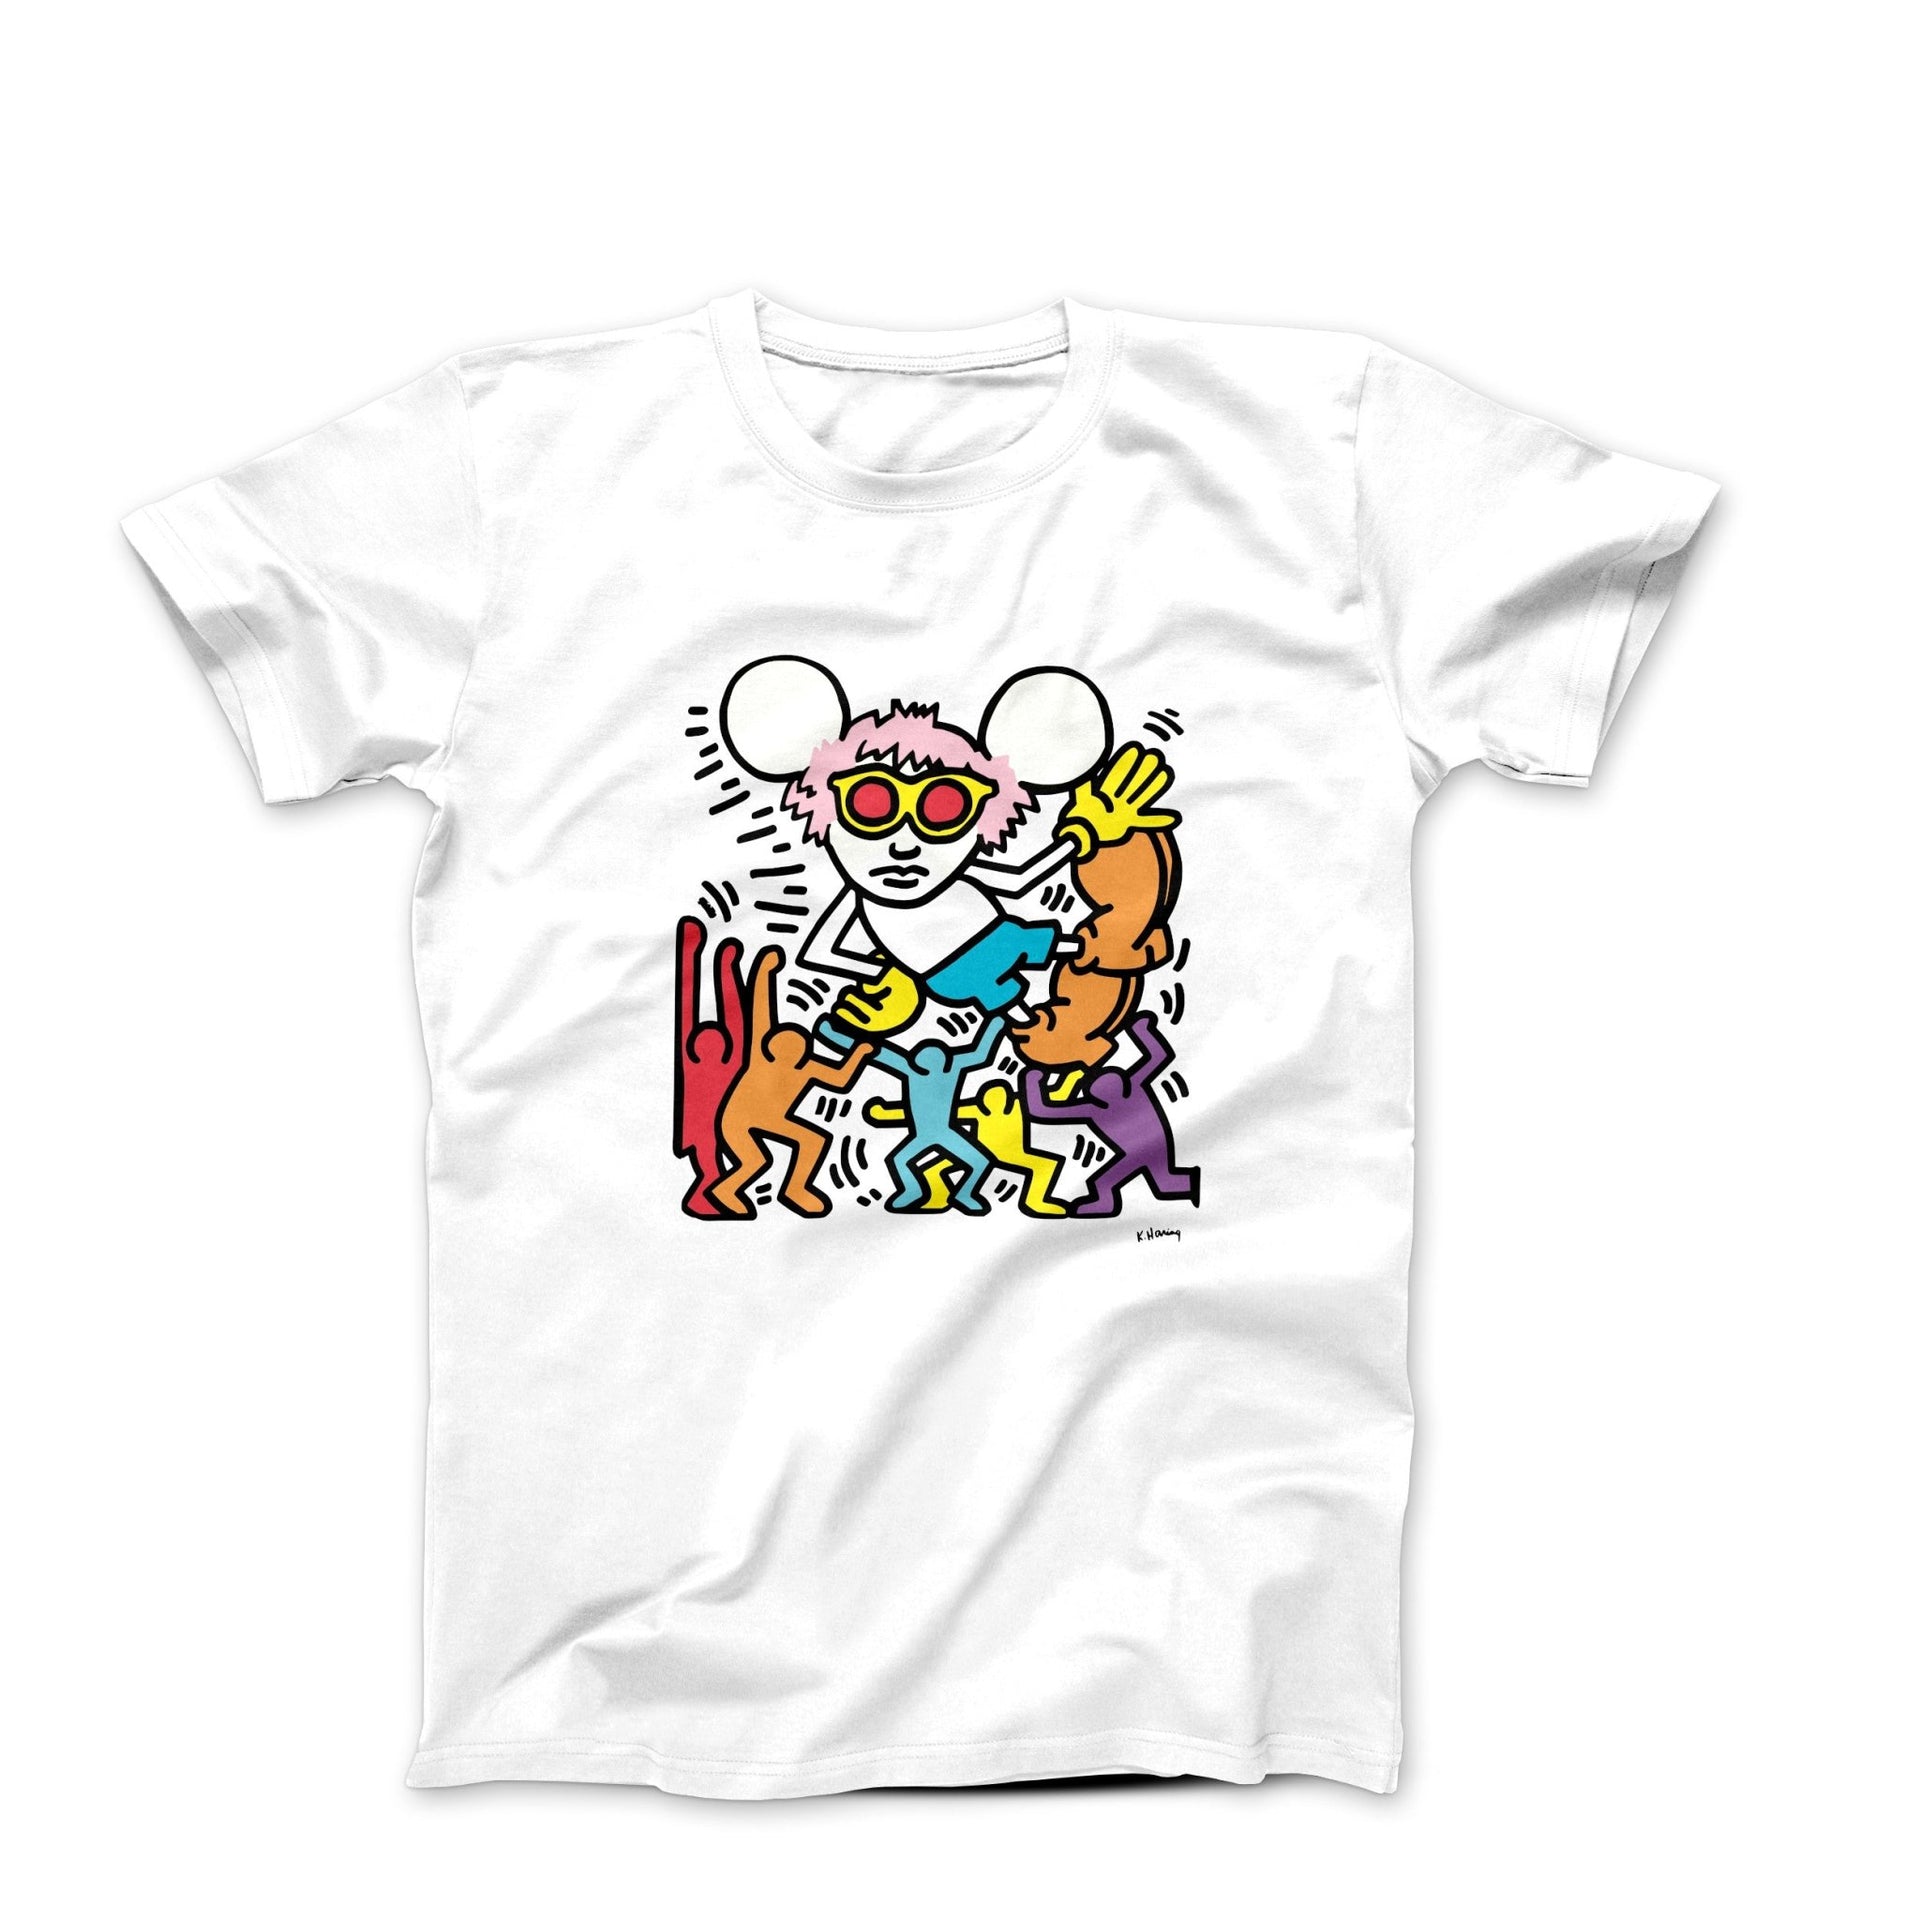 Andy Mouse I Art T-shirt - Clothing - Harvey Ltd